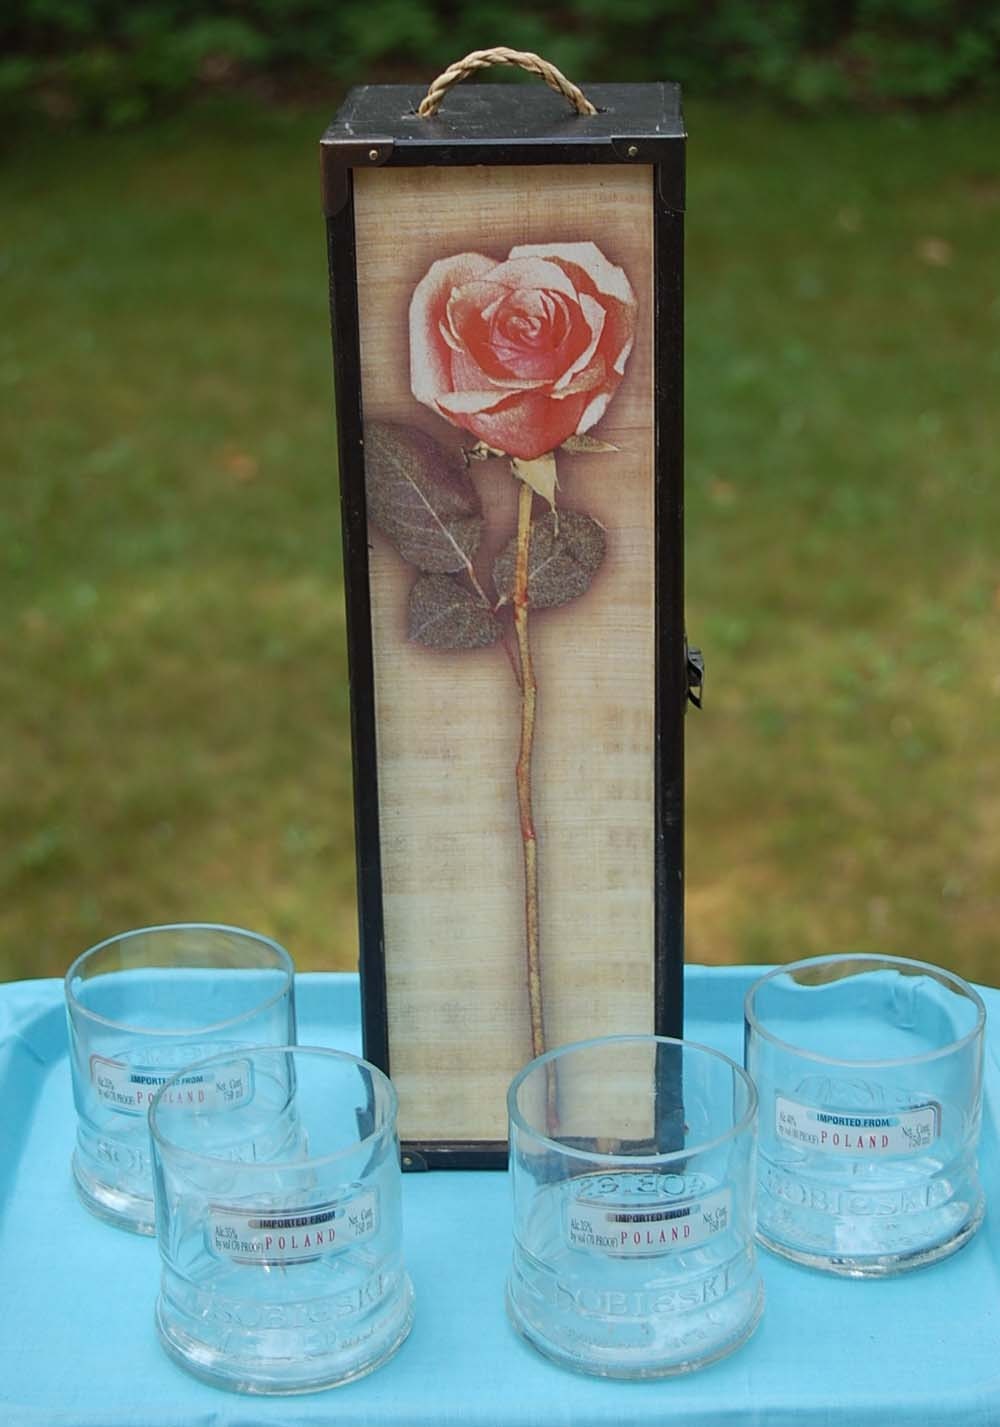 Rose Gift Box with  4 Sobieski Polish Vodka On the Rocks Glasses